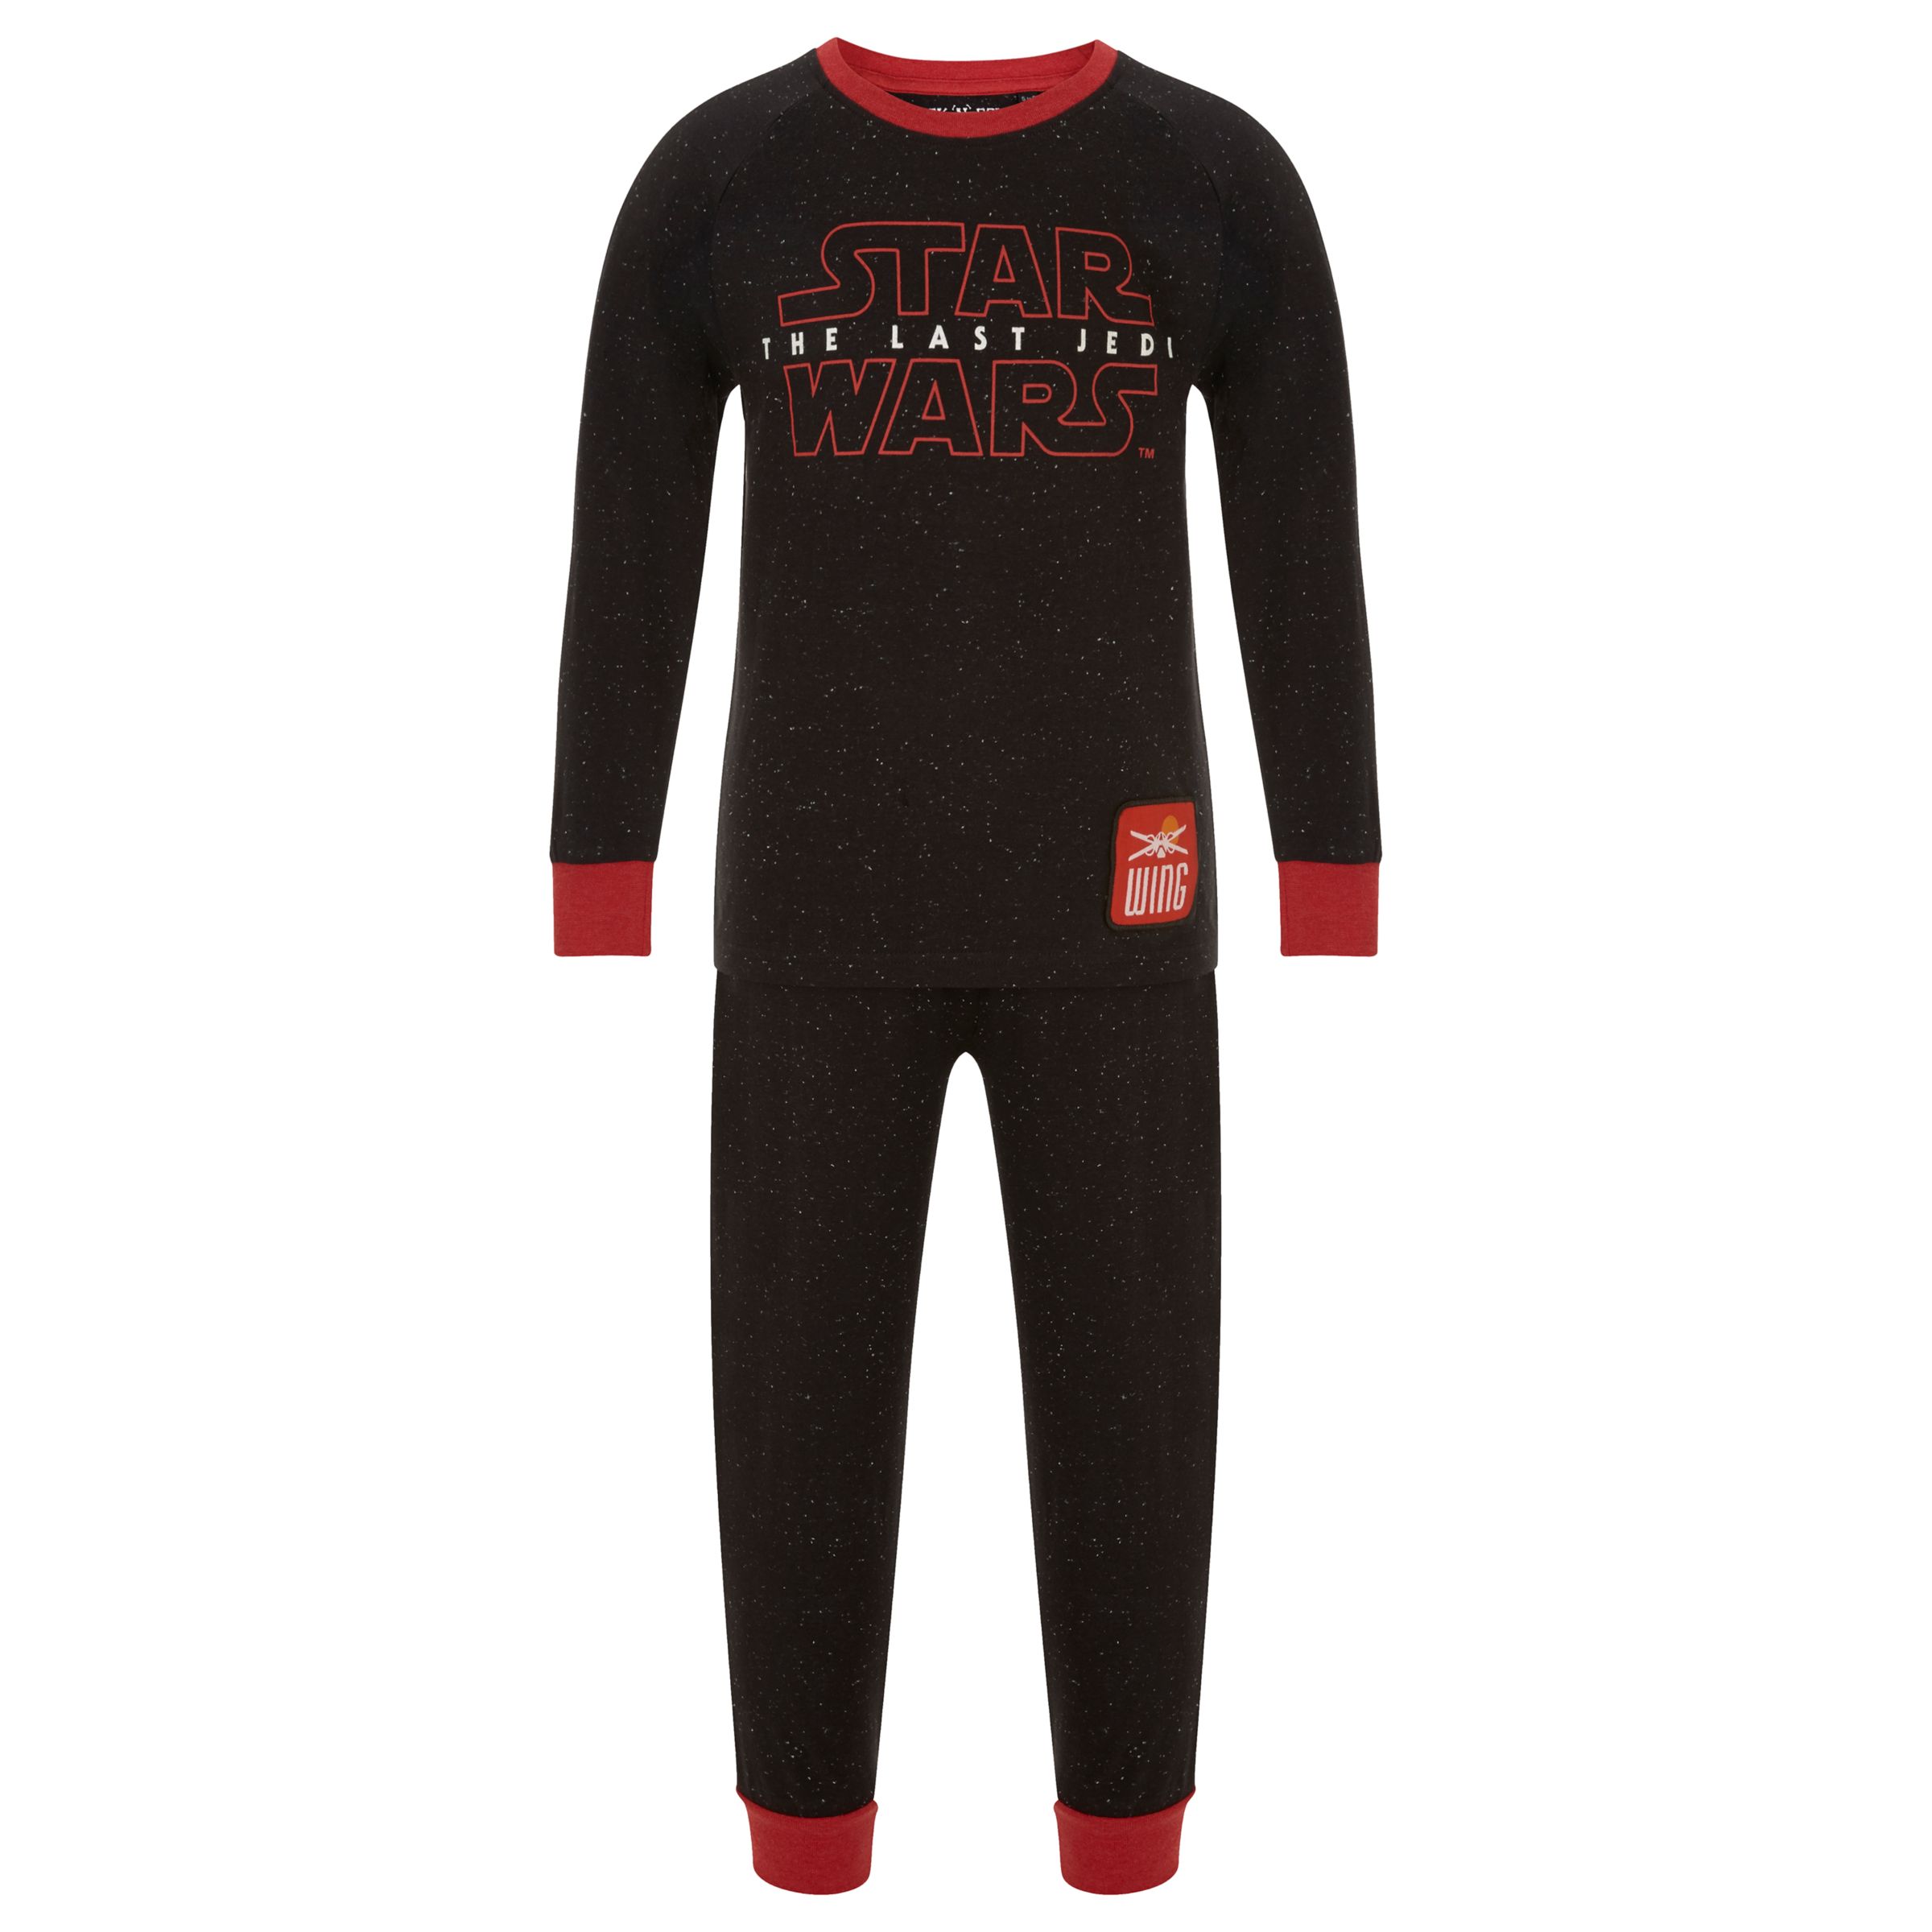 Star Wars Children's Long Pyjamas, Black